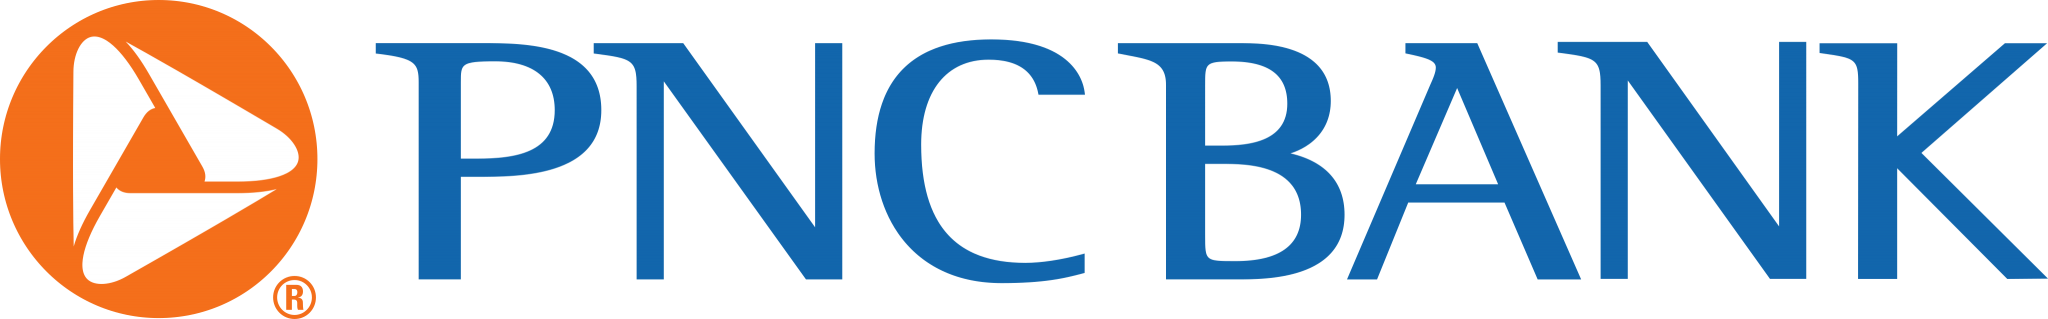 PNC Bank Logo - PNG e Vetor - Download de Logo